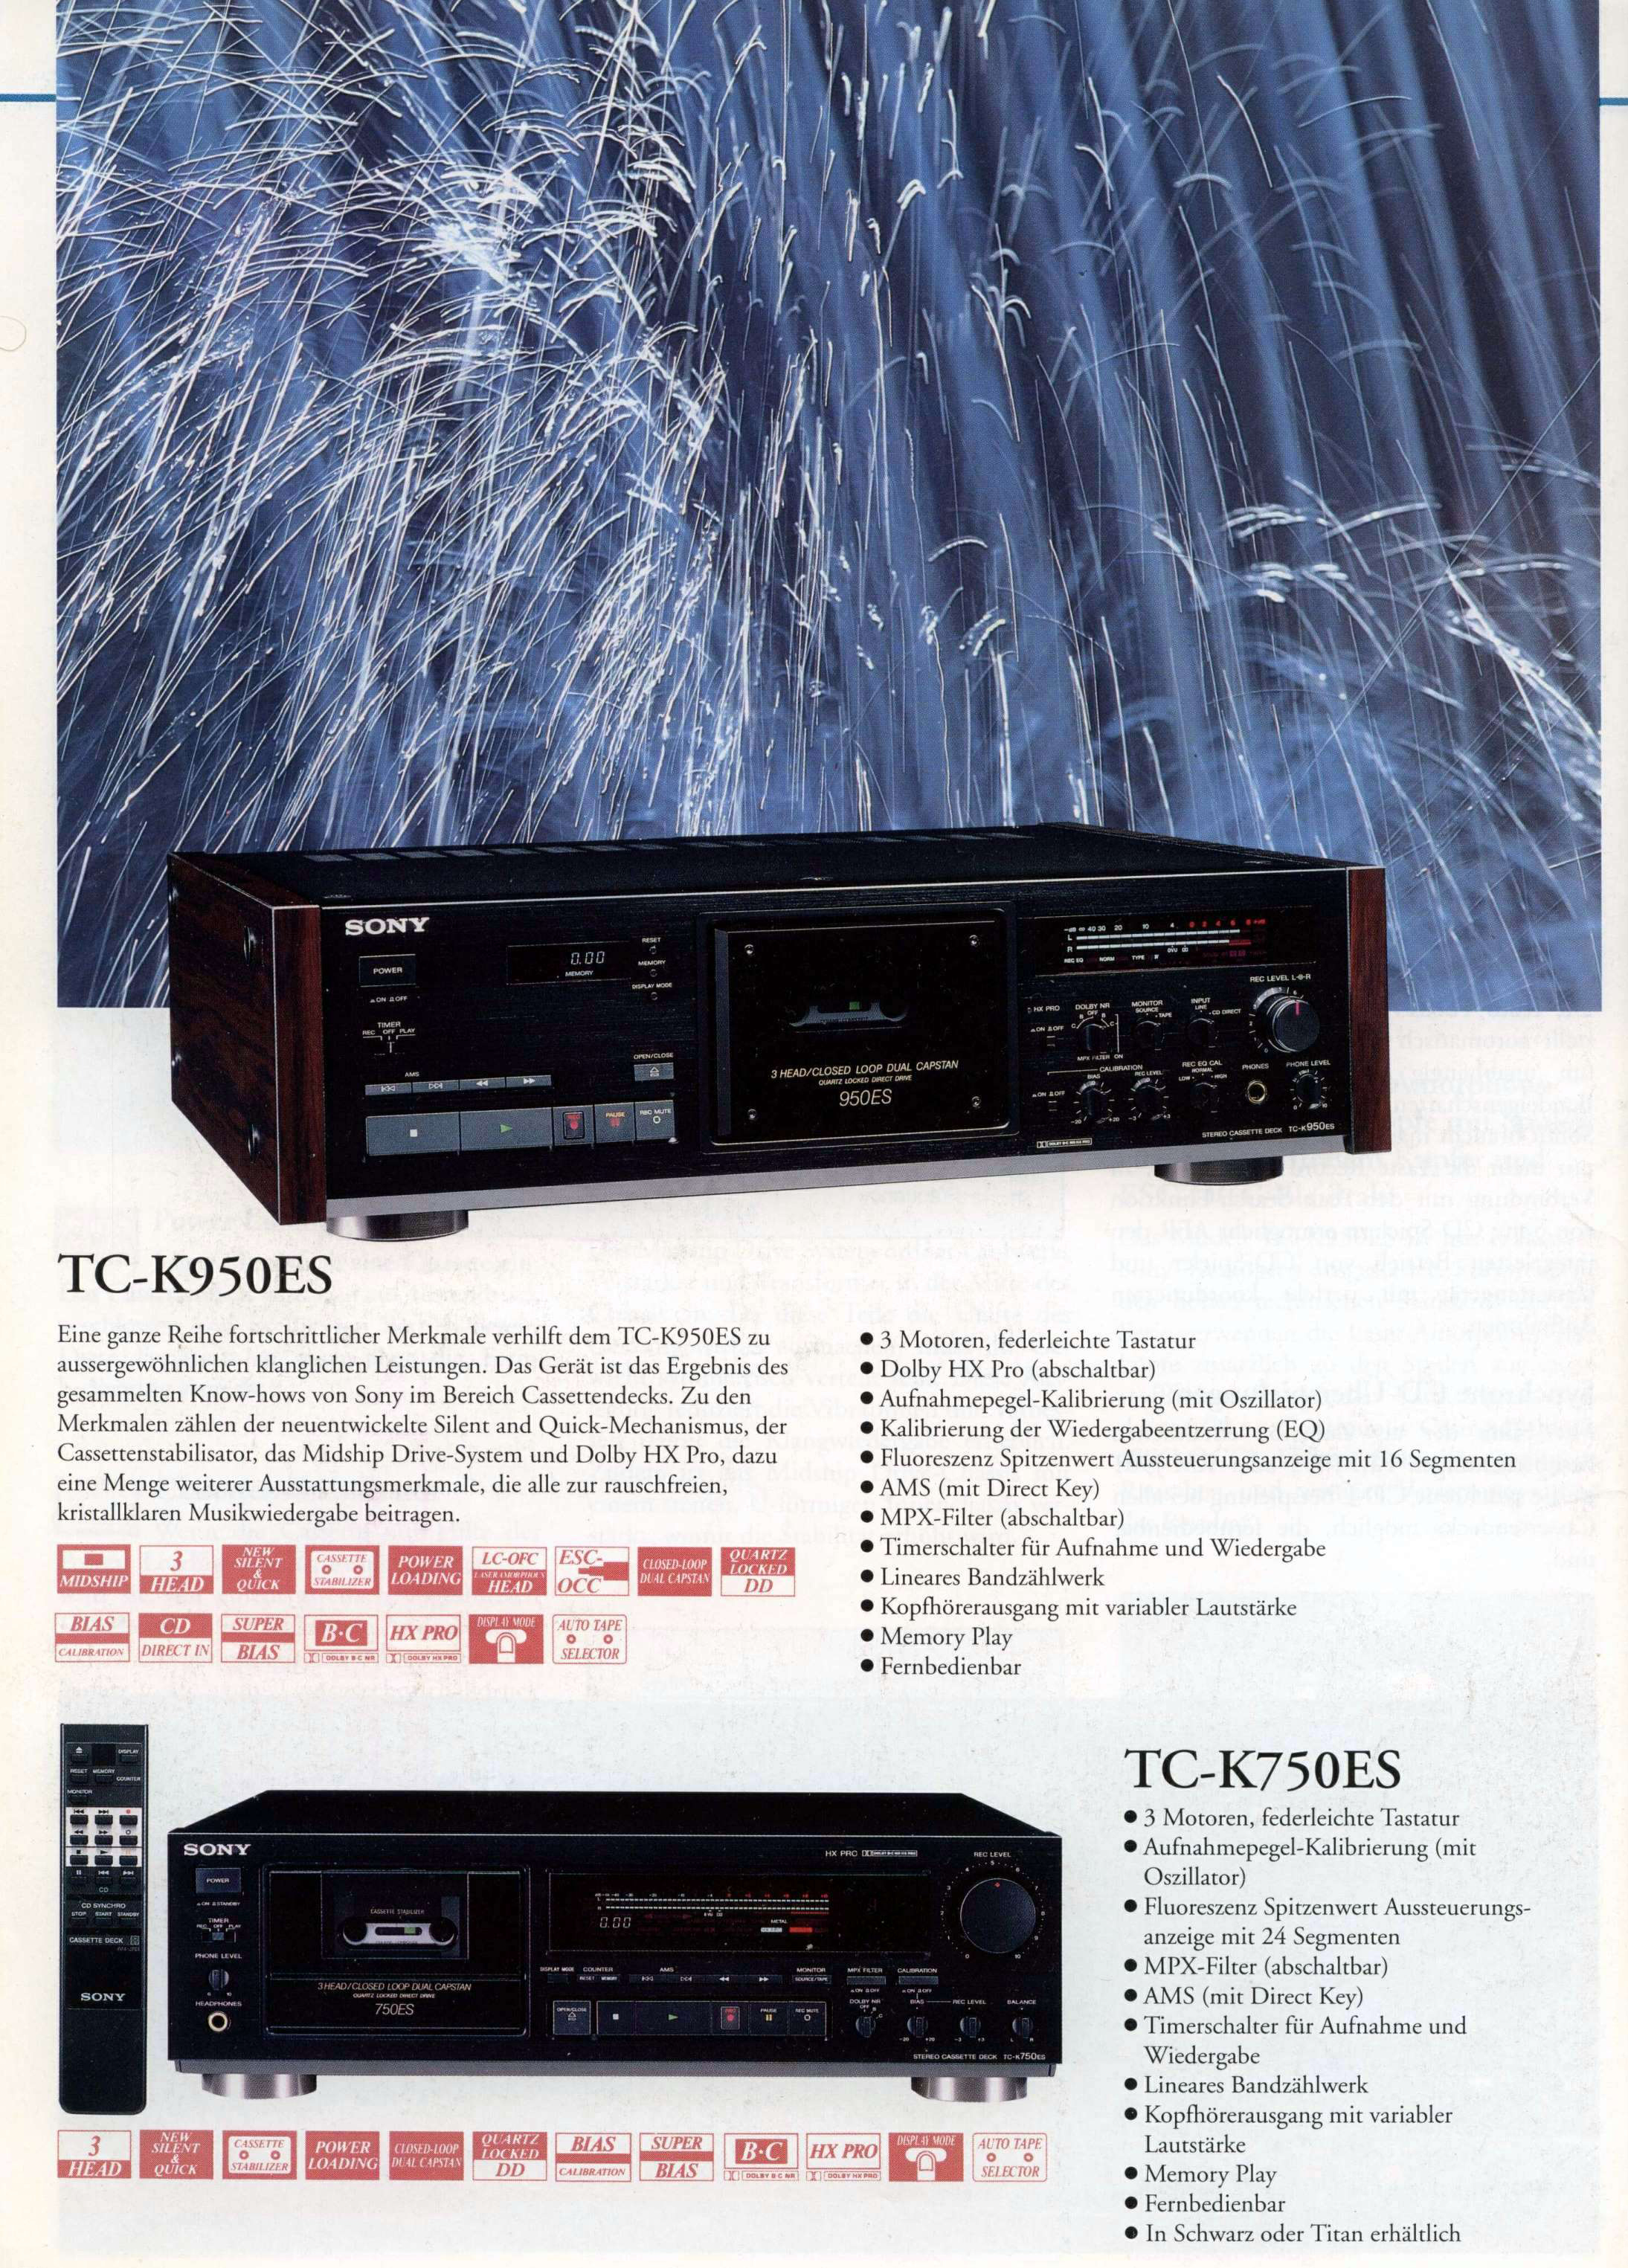 Sony TC-K 750-950 ES Prospekt-1991.jpg